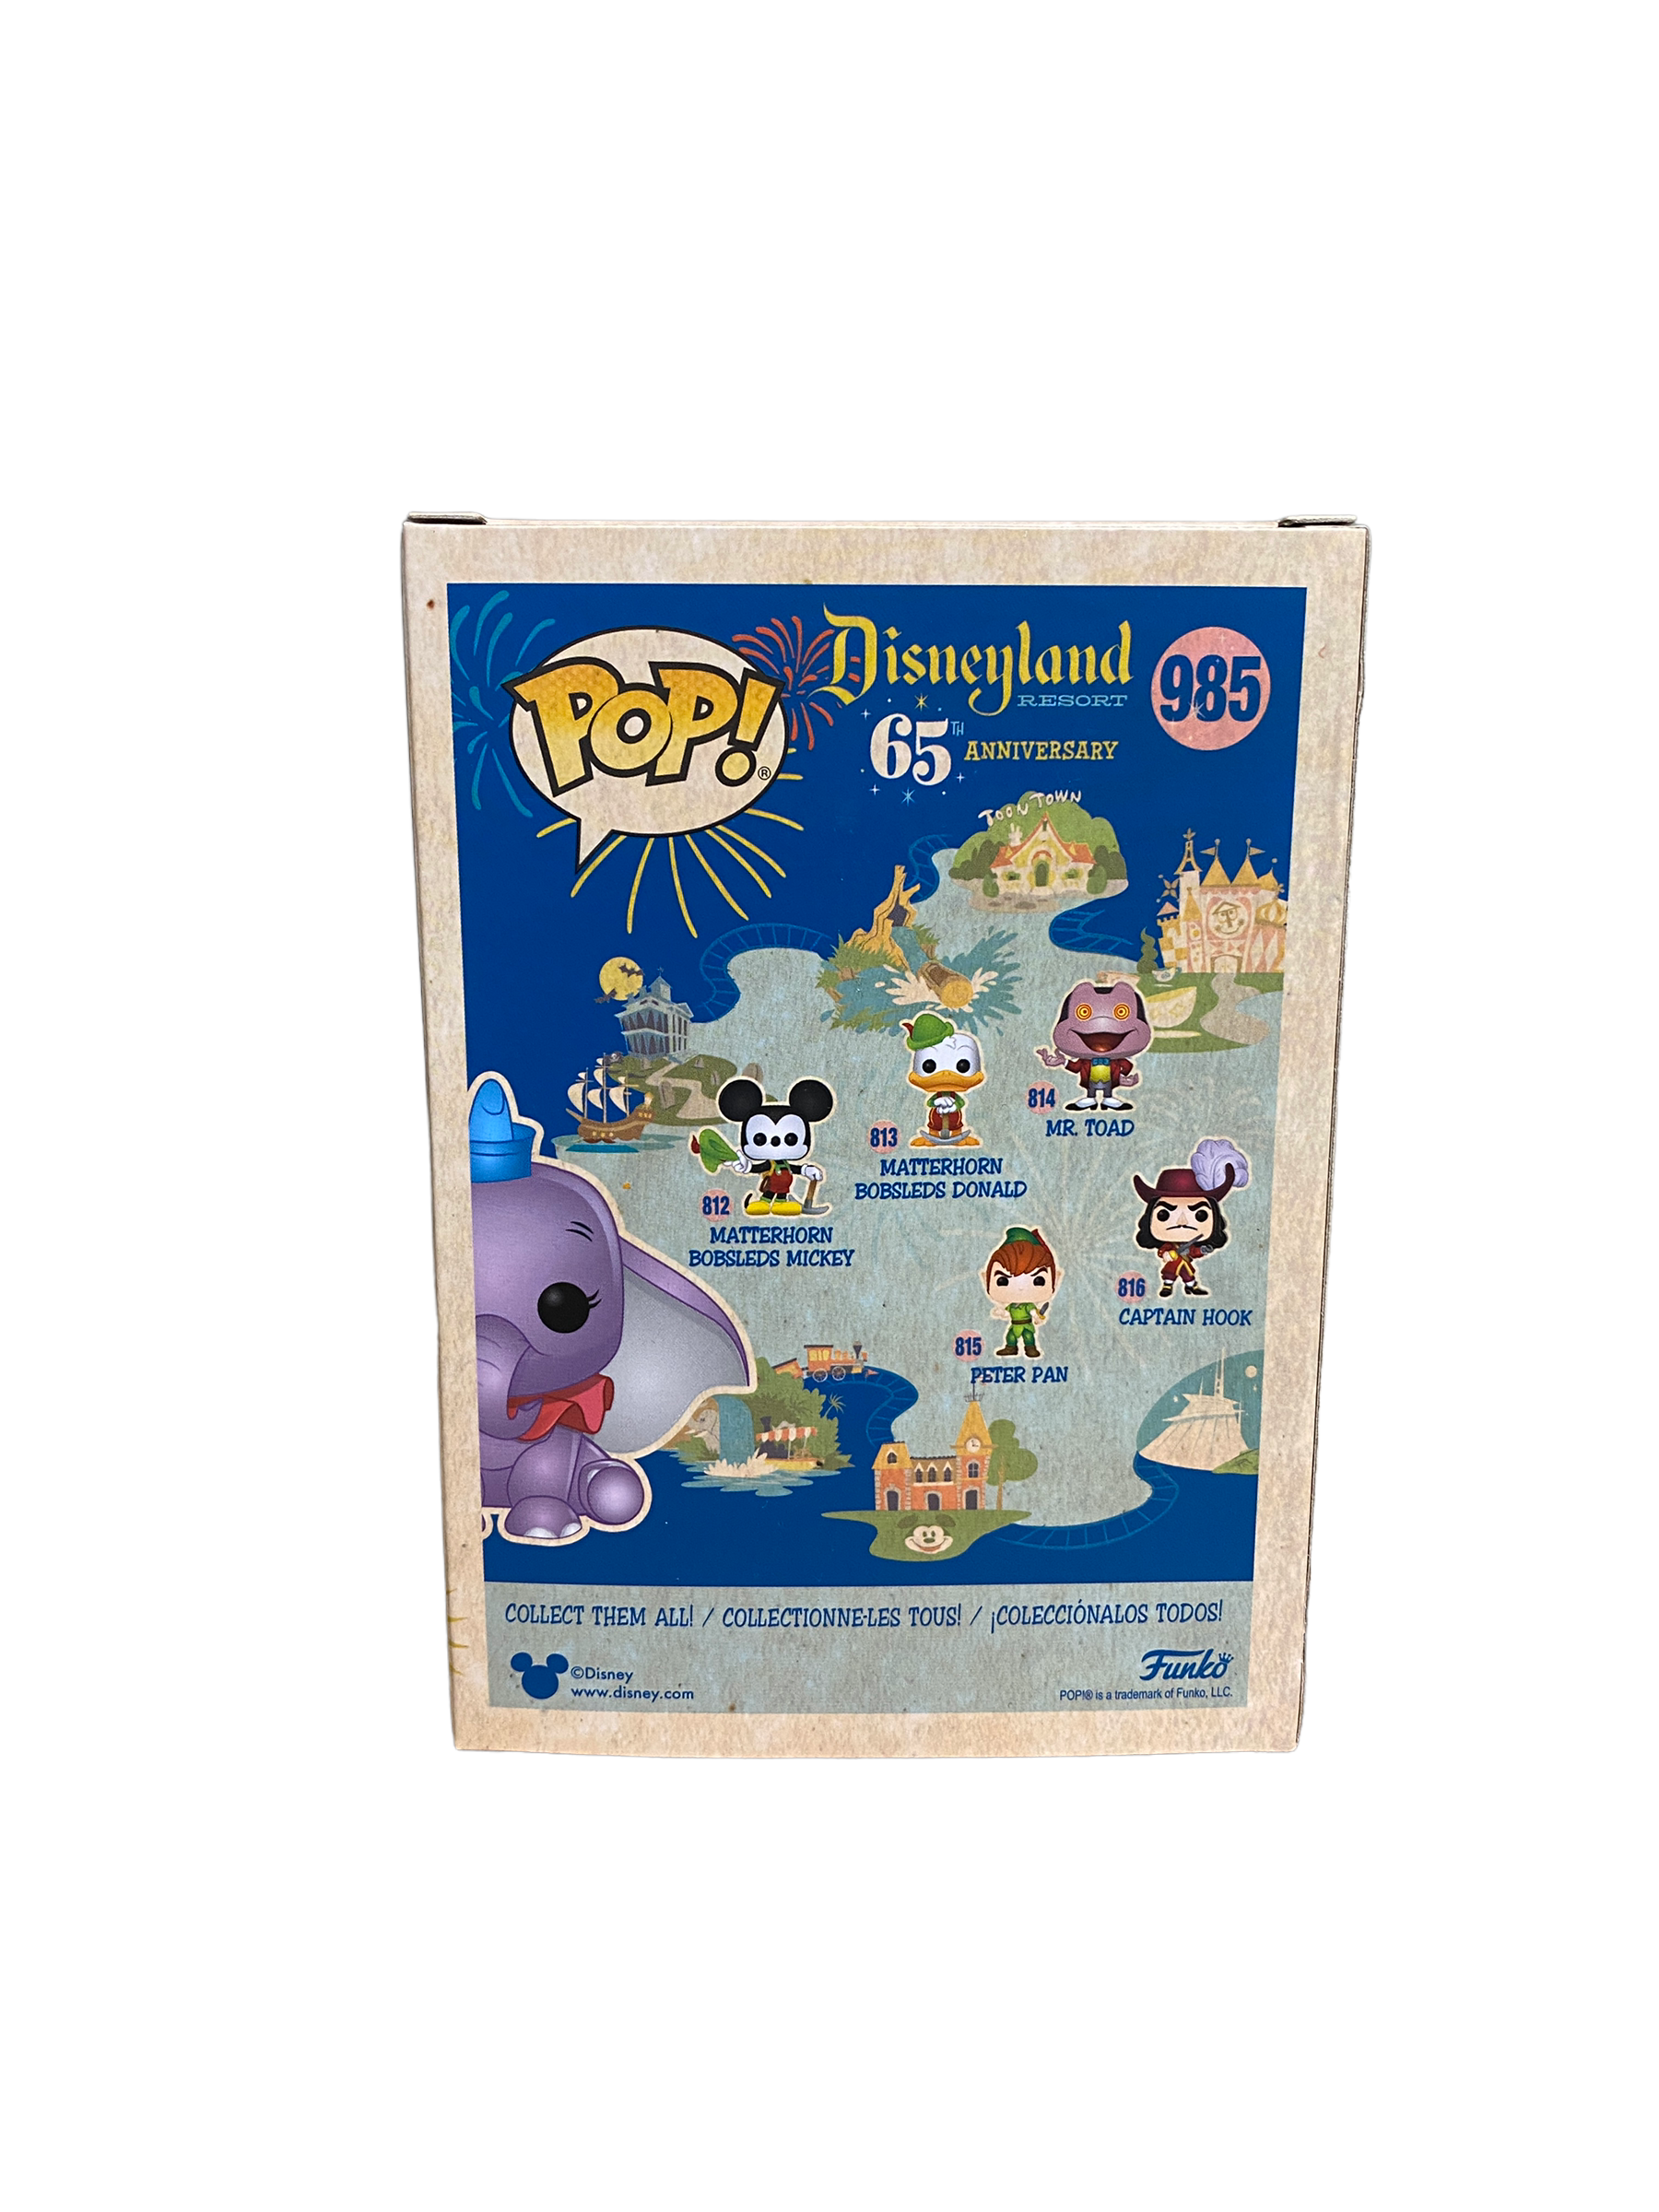 Dumbo #985 (Anniversary) Funko Pop! - Disneyland Resort 65th Anniversary - Funko Shop Exclusive - Condition 9/10